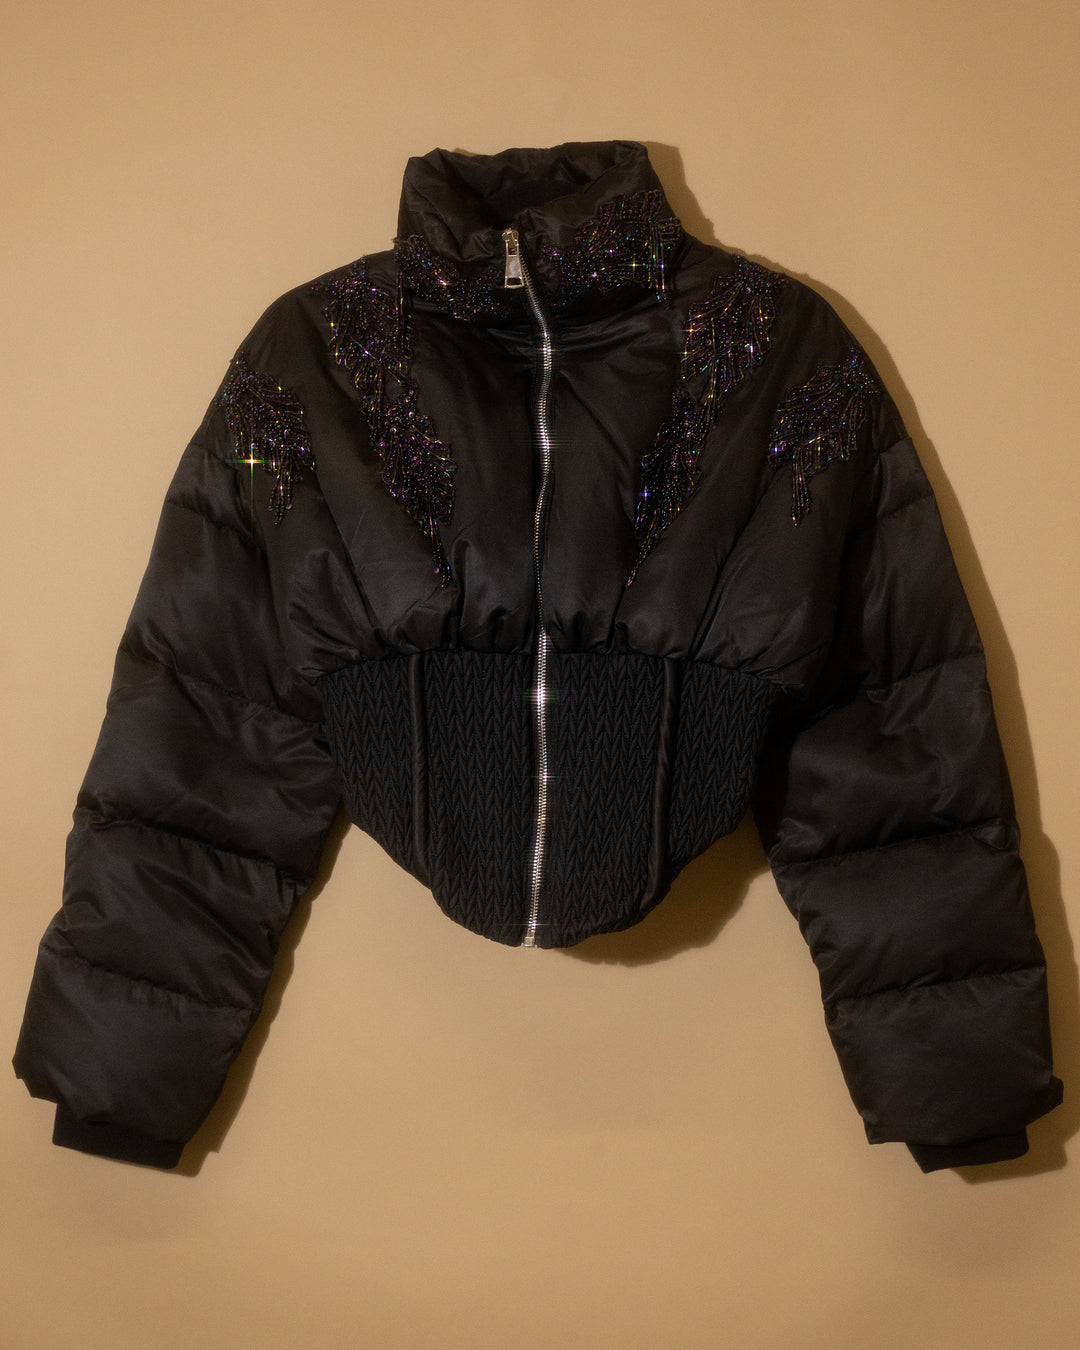 Puffer jacket/corset negra con cristales